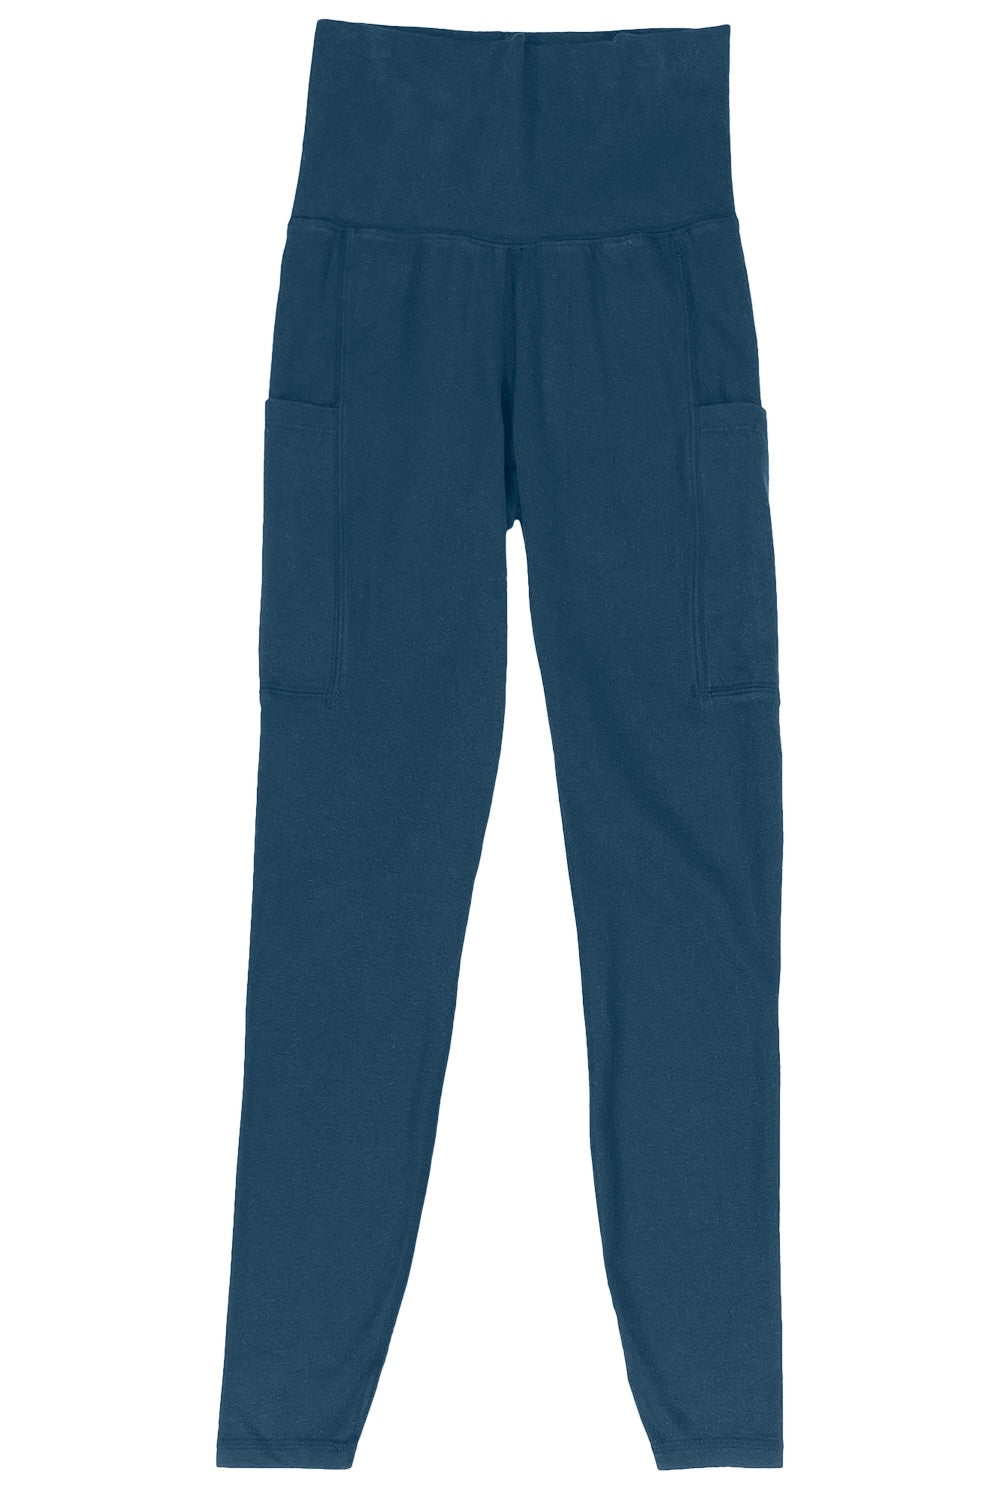 Orosi Pocket Leggings - Mid Rise | Jungmaven Hemp Clothing & Accessories / Color: Navy